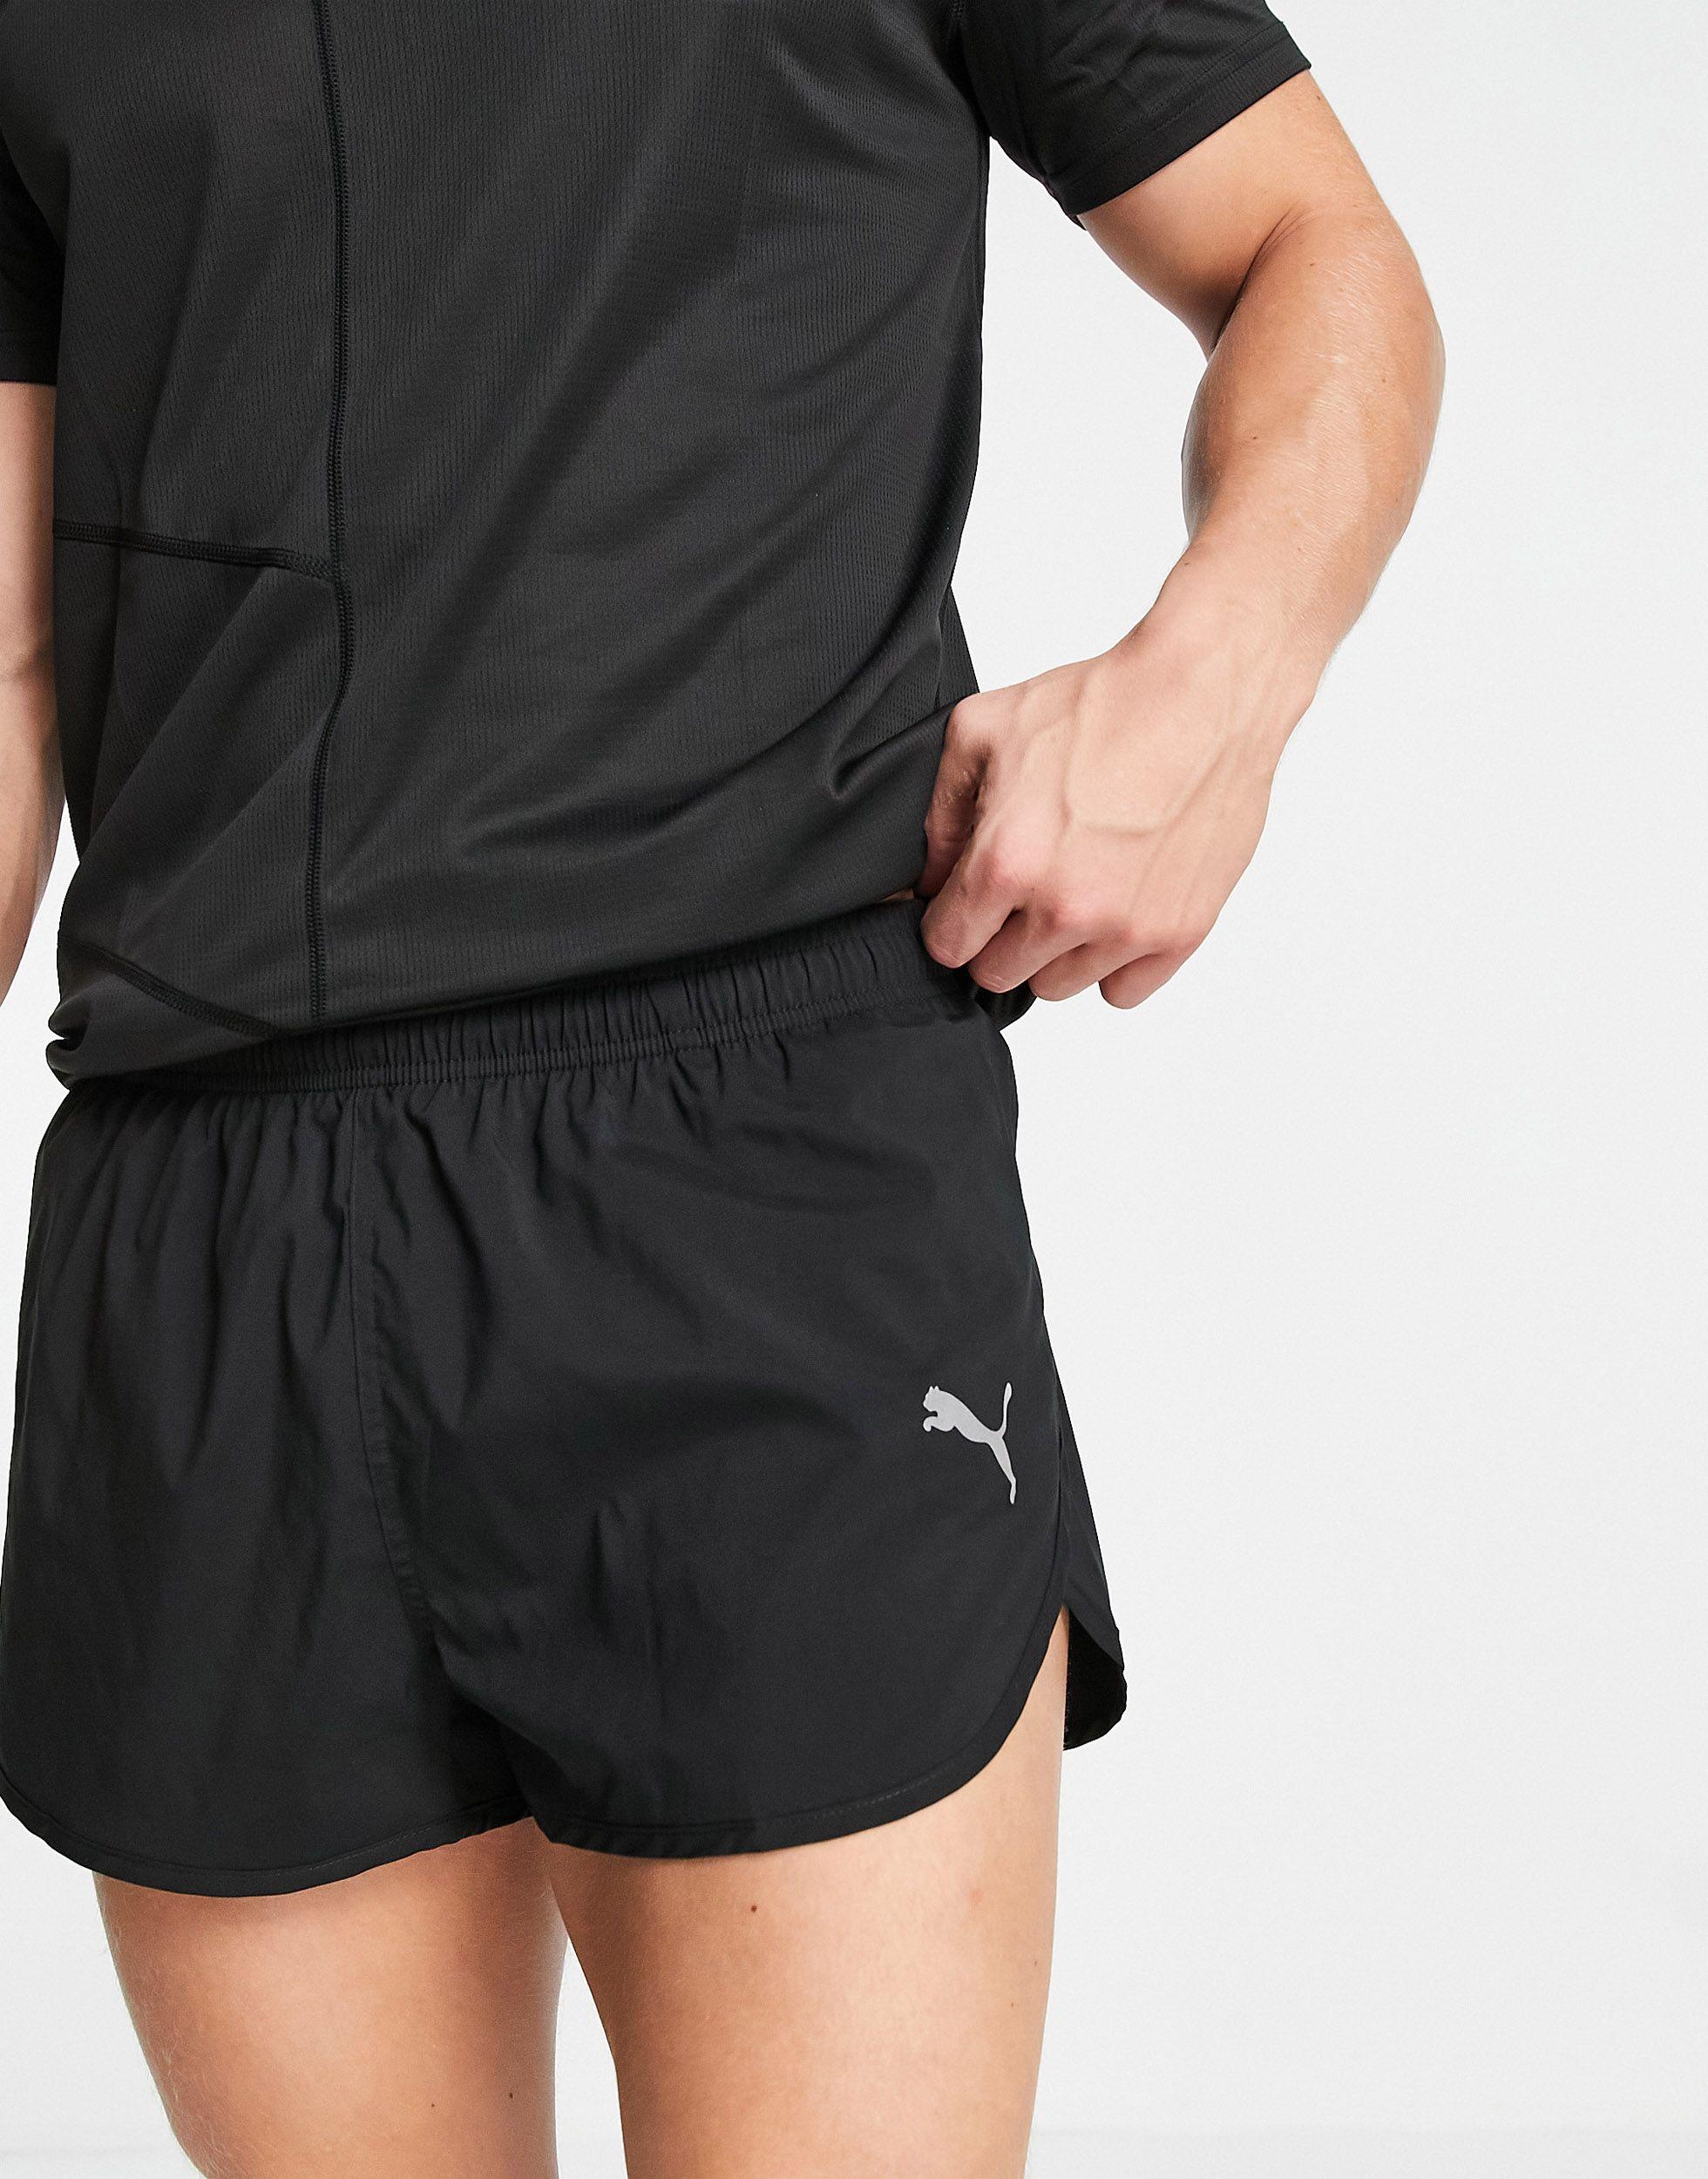 animal Supple despair PUMA Running Split Shorts in Black for Men - Save 5% | Lyst Canada